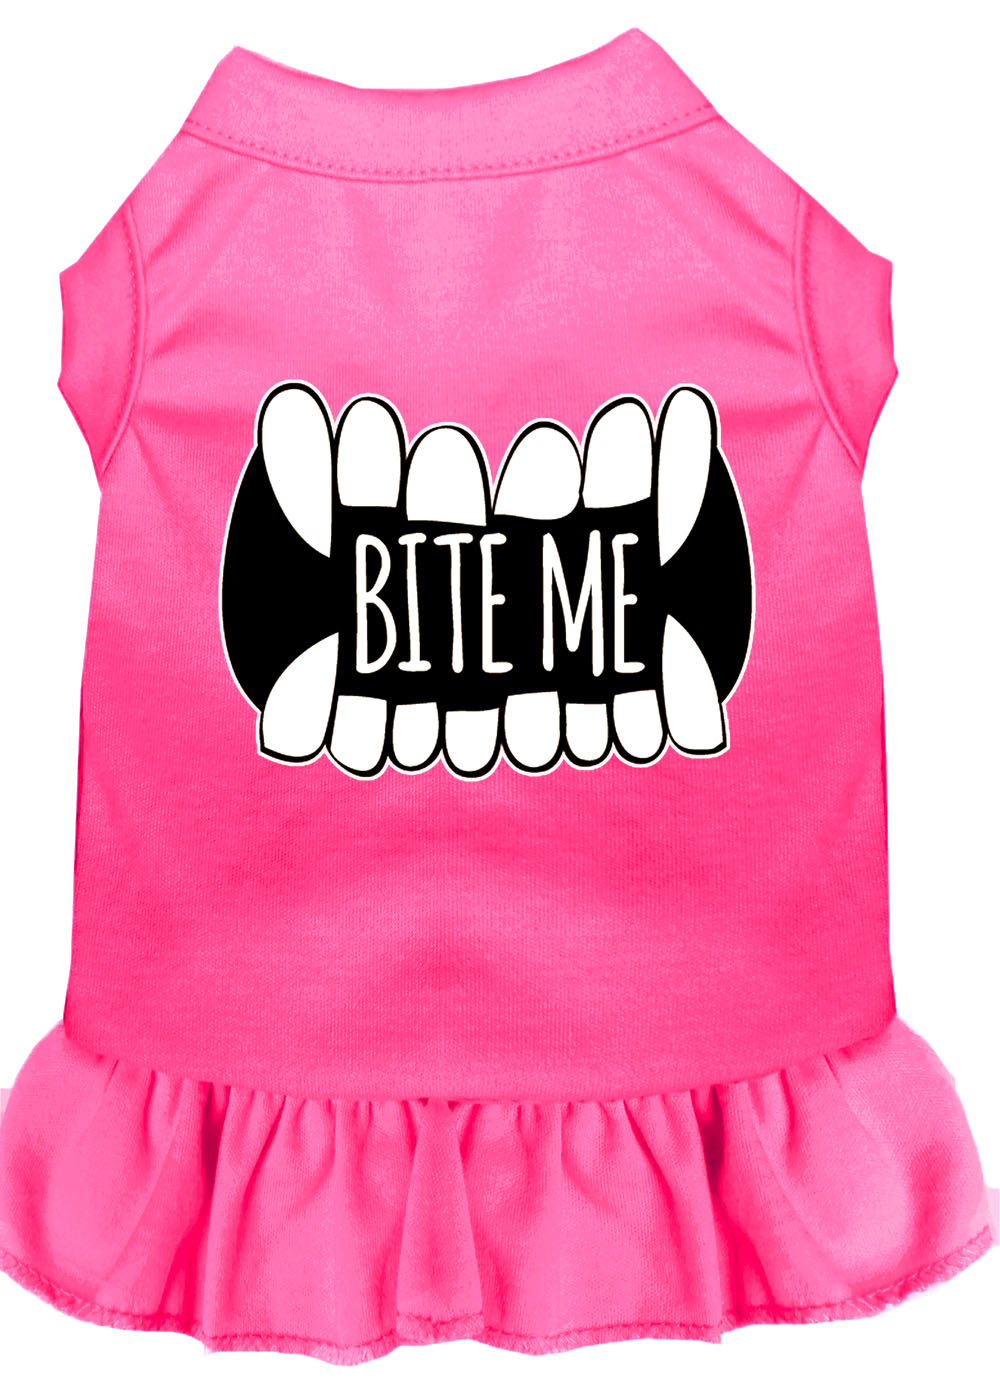 Bite Me Screen Print Dog Dress Bright Pink XL